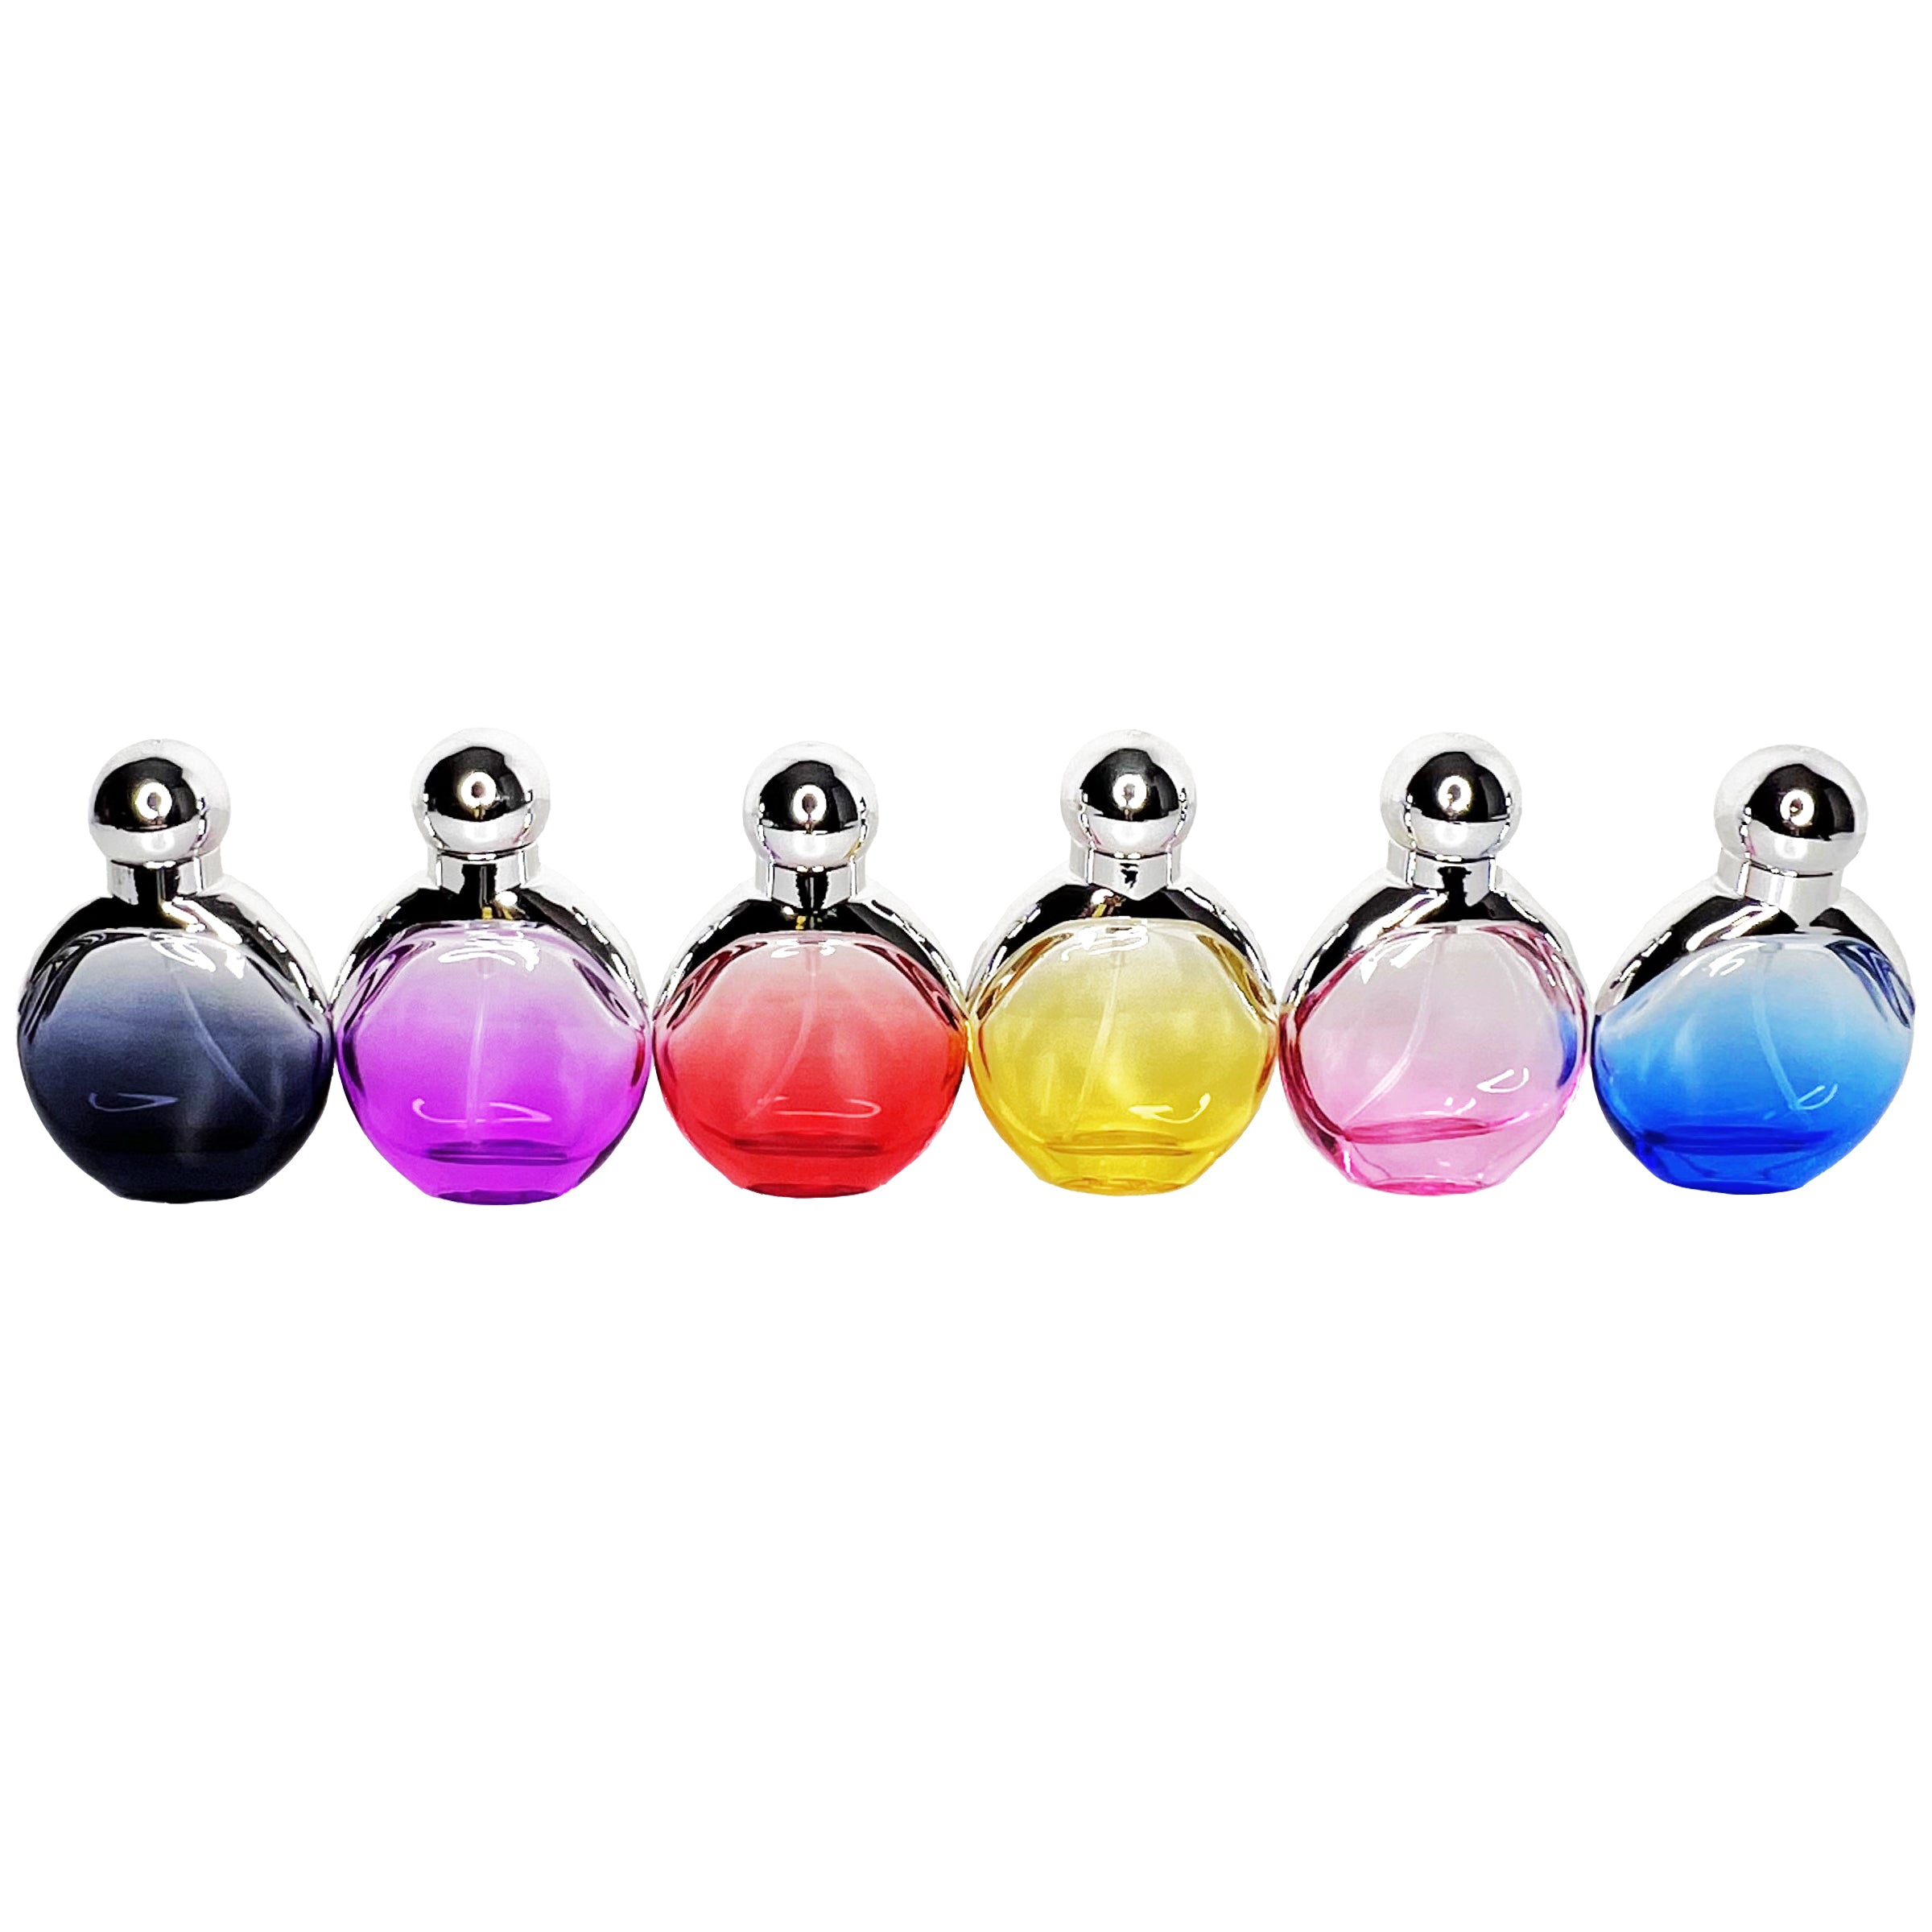 30ml 1oz 6 colors clear gradient glass spray bottles